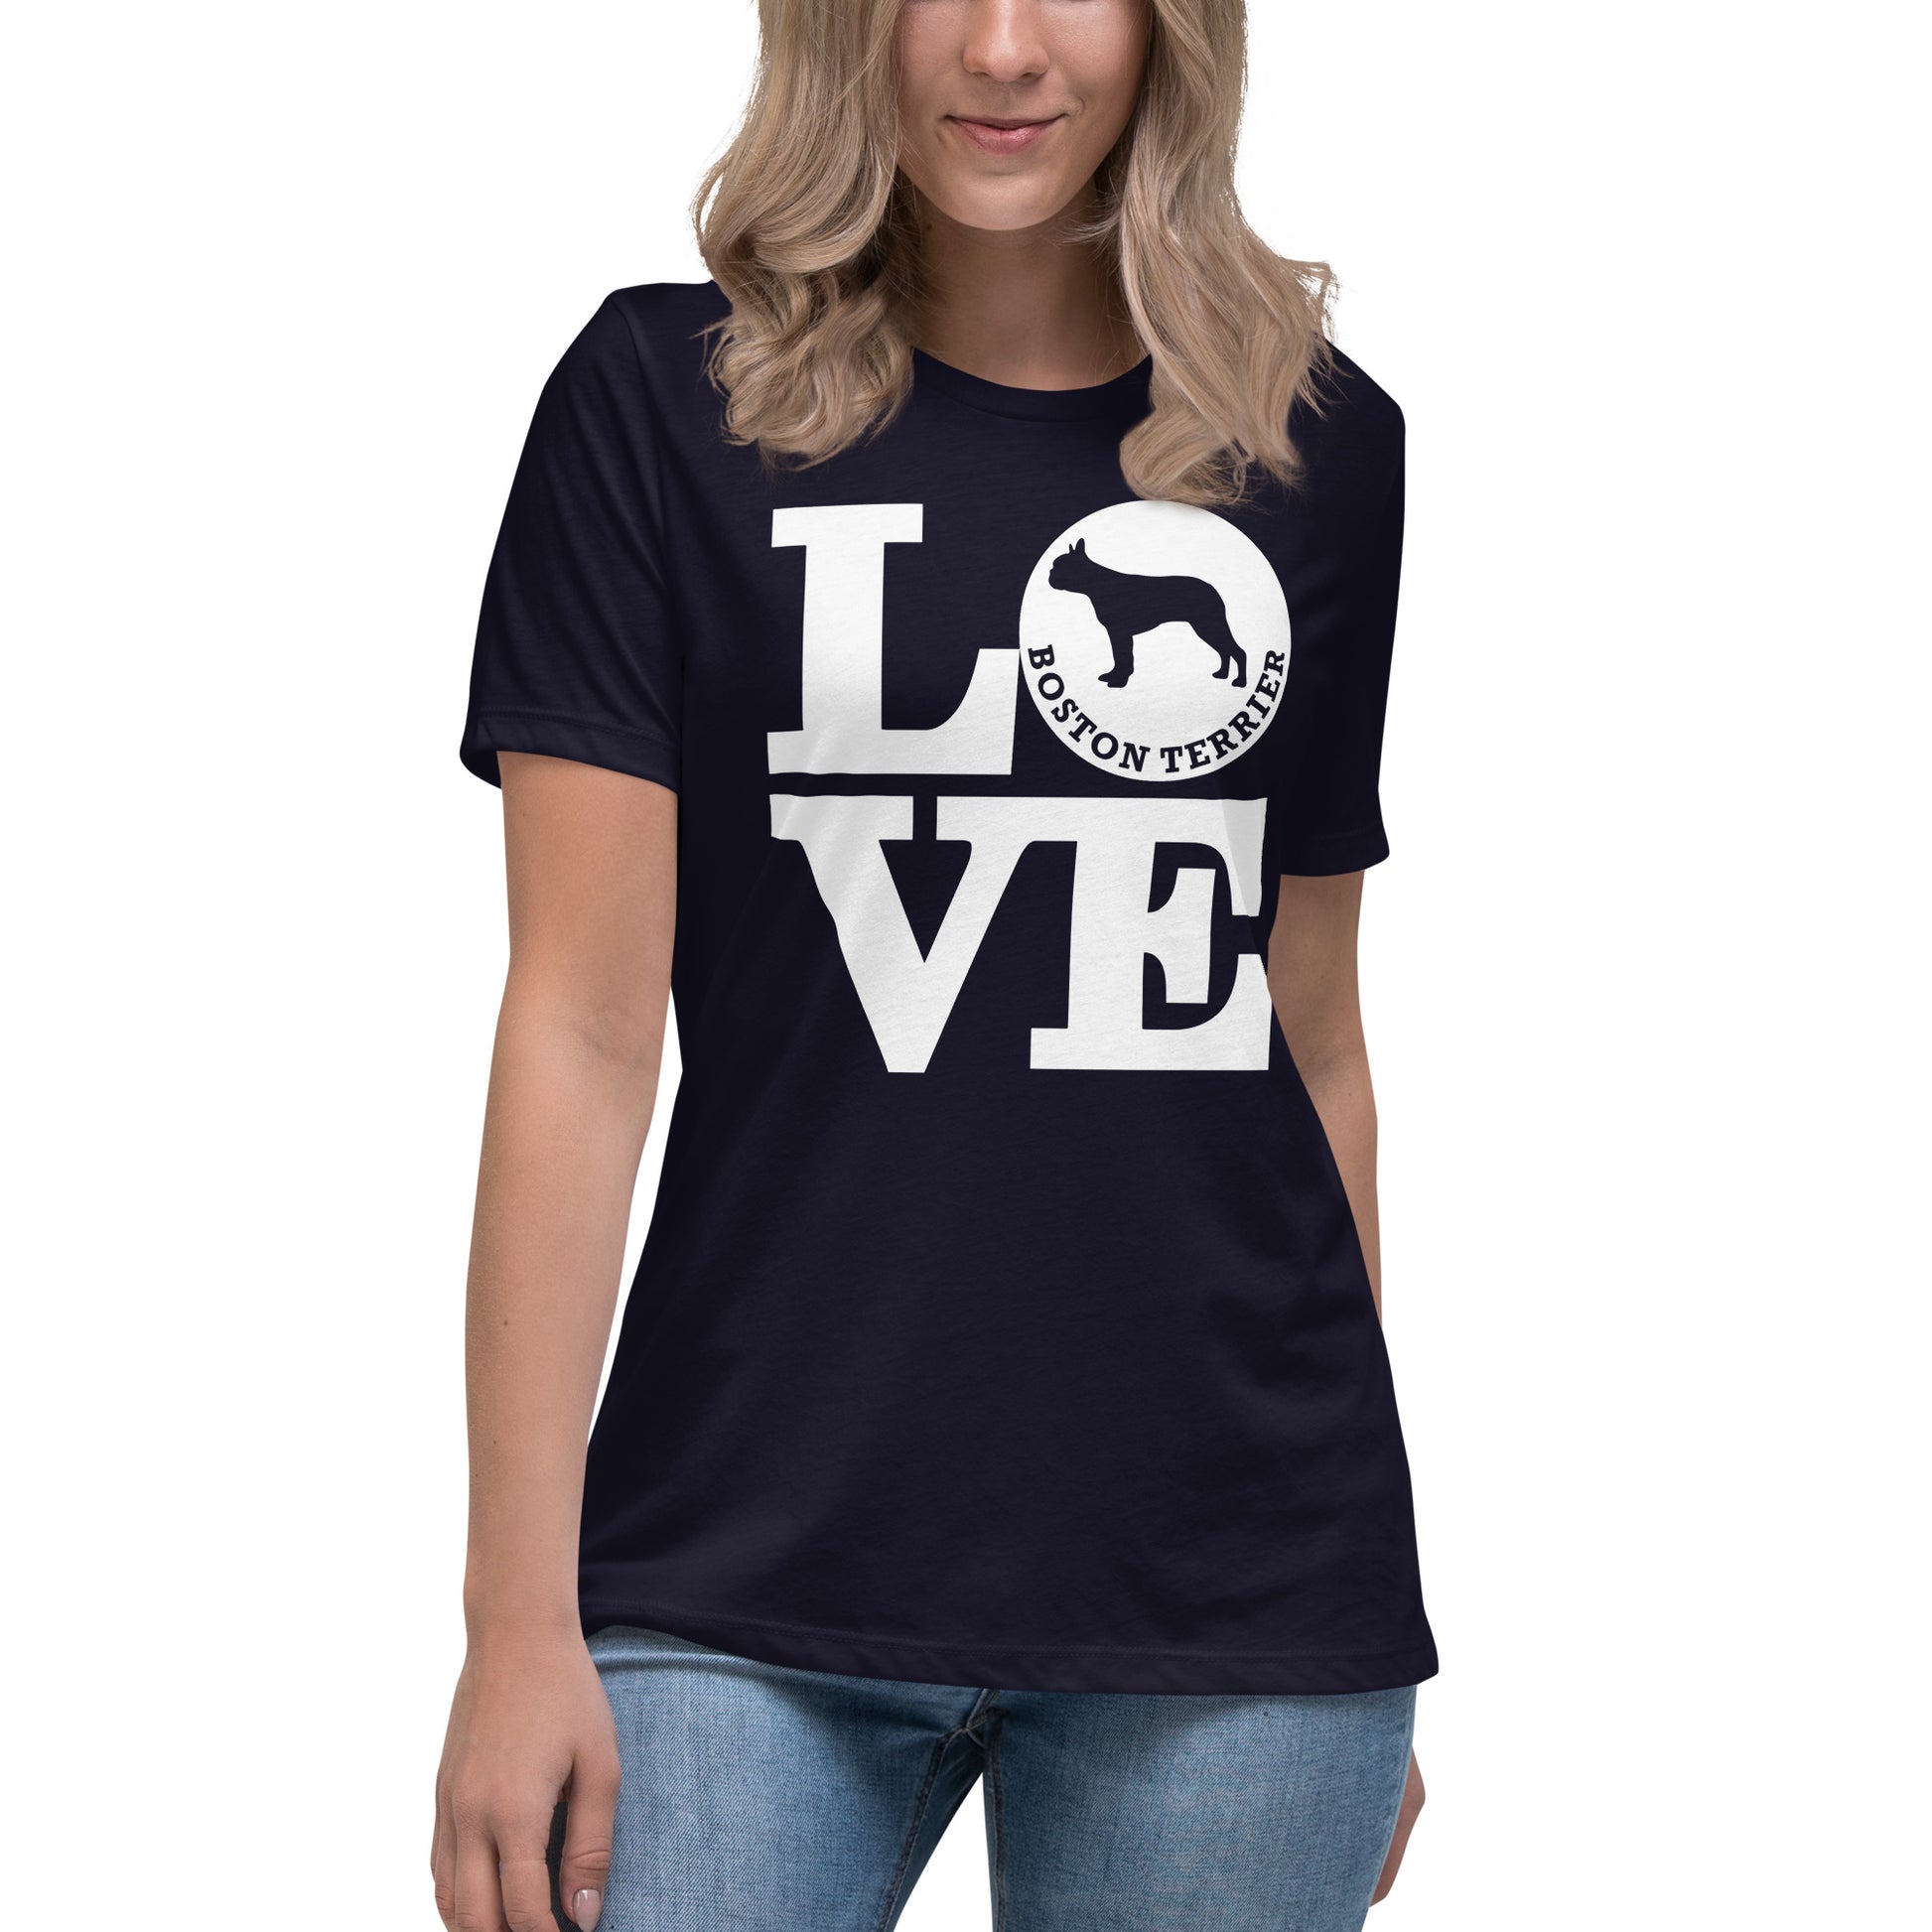 Boston Terrier Love women’s navy t-shirt by Dog Artistry.